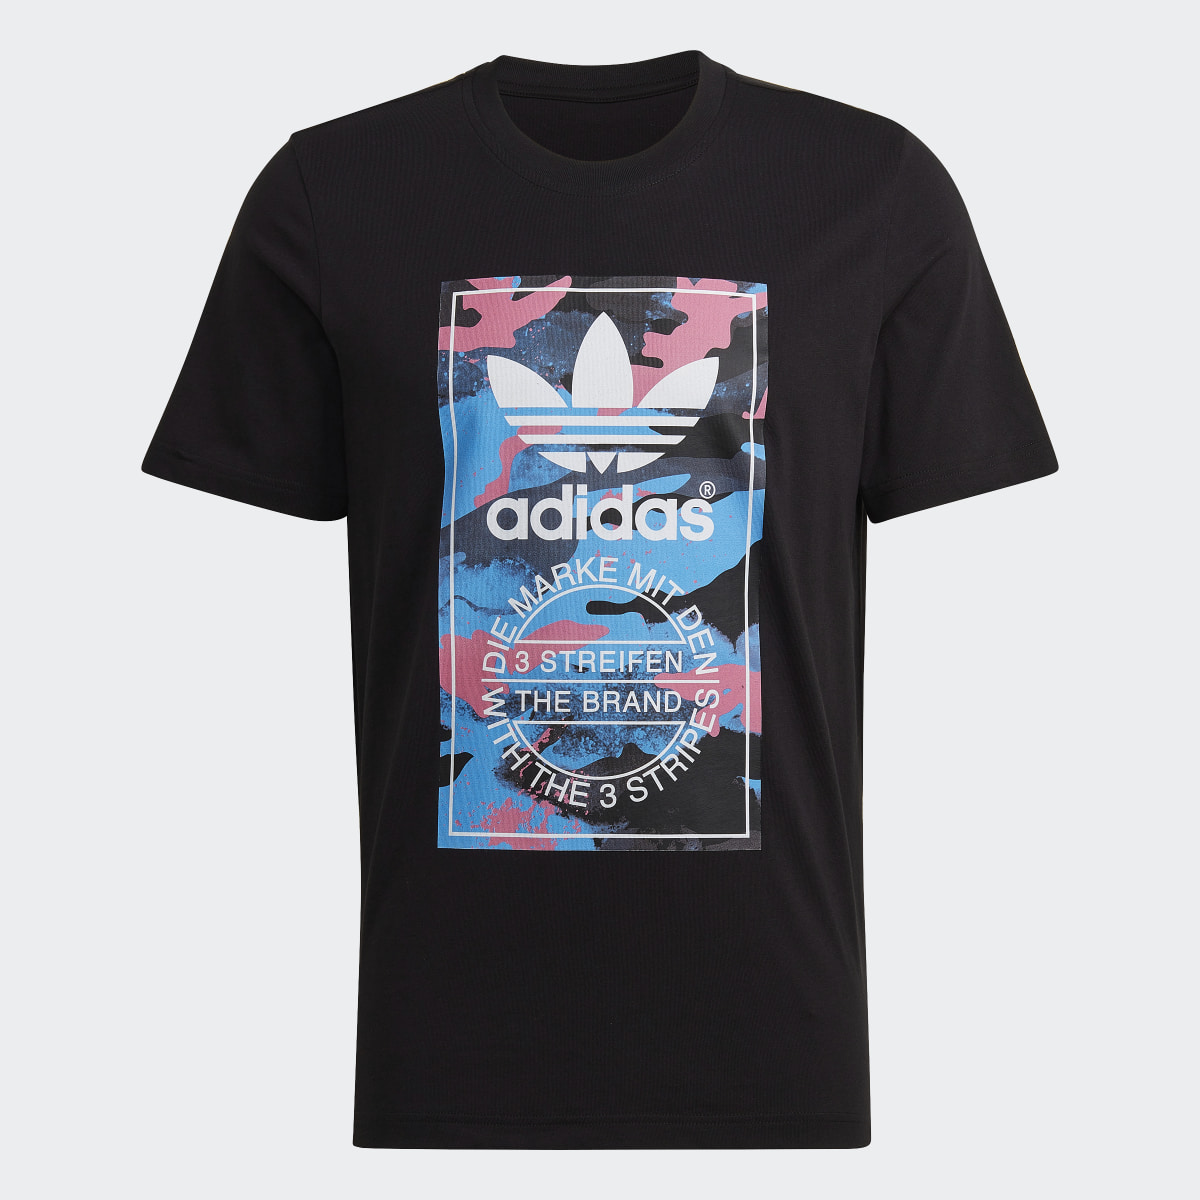 Adidas T-shirt. 5